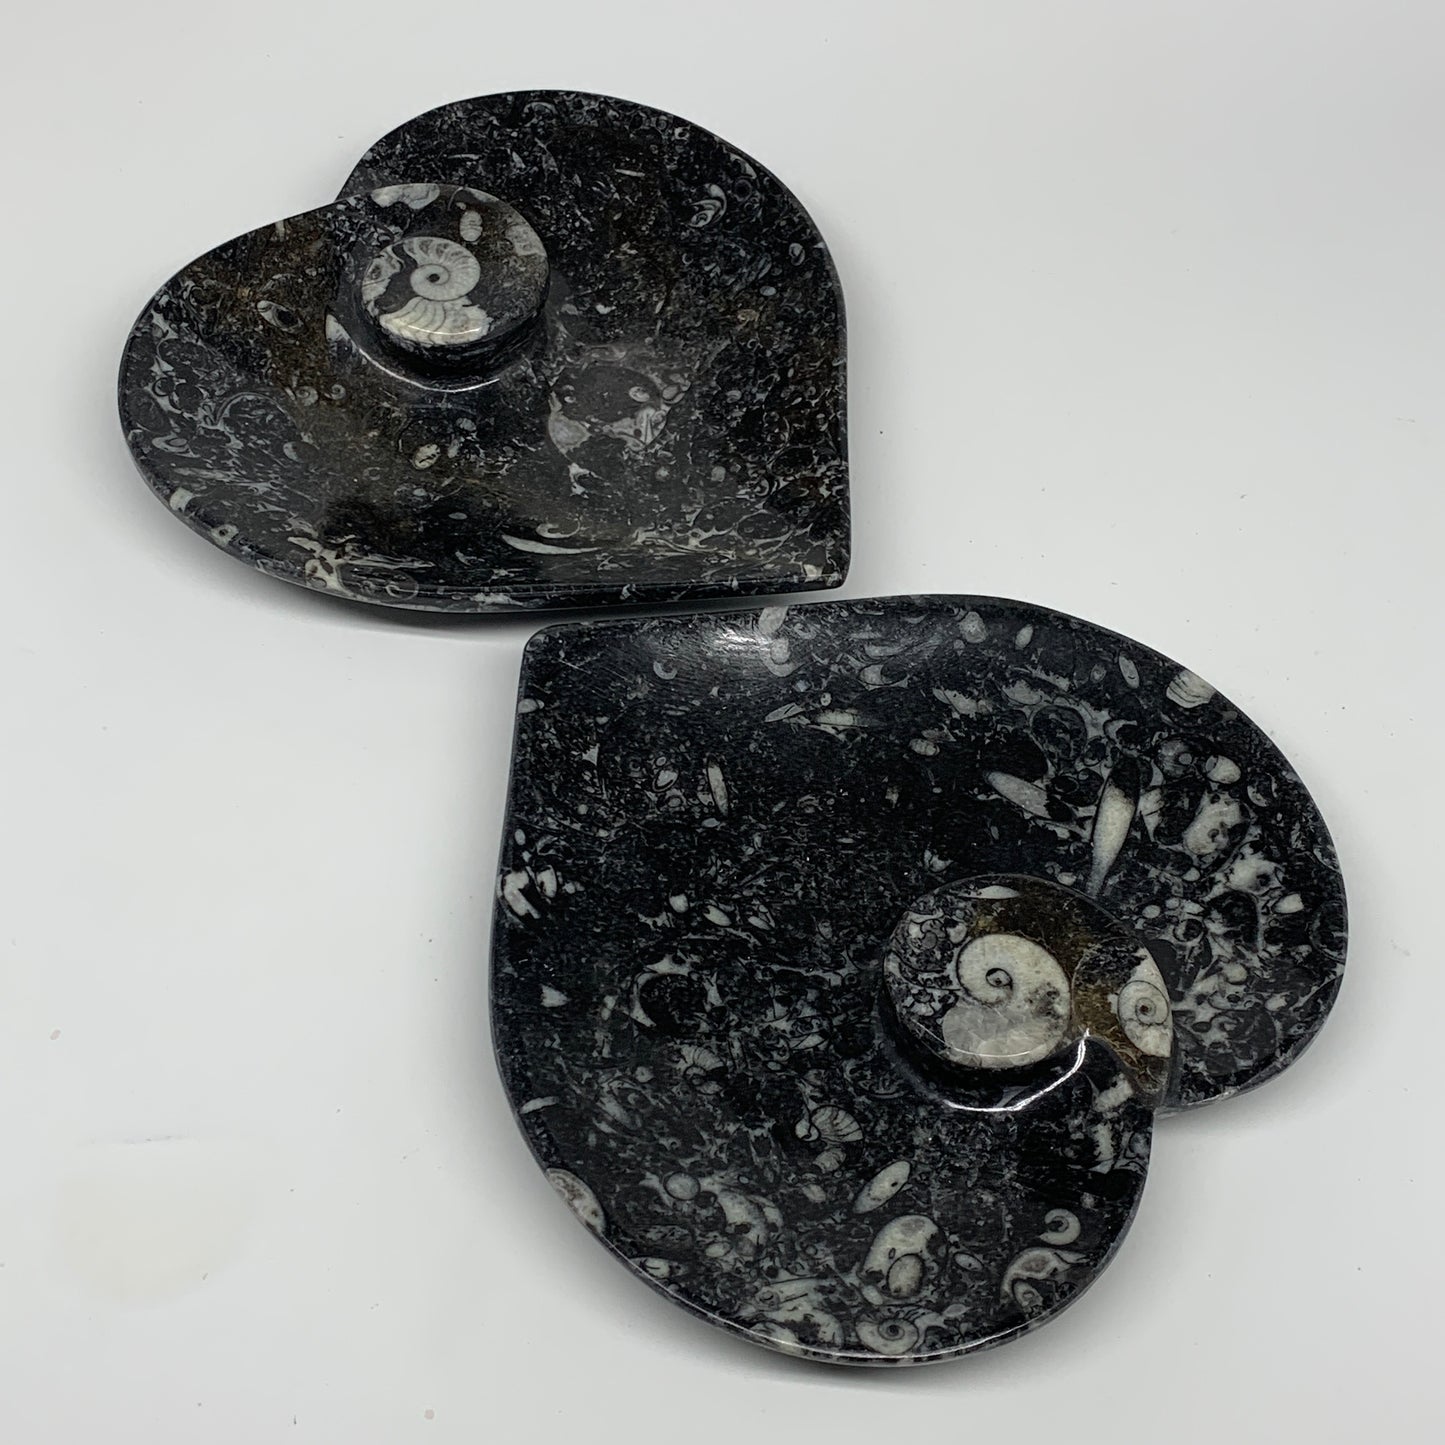 2pcs Set, 6.25"x6.25" Heart Fossils Orthoceras Ammonite Bowls @Morocco, B8480